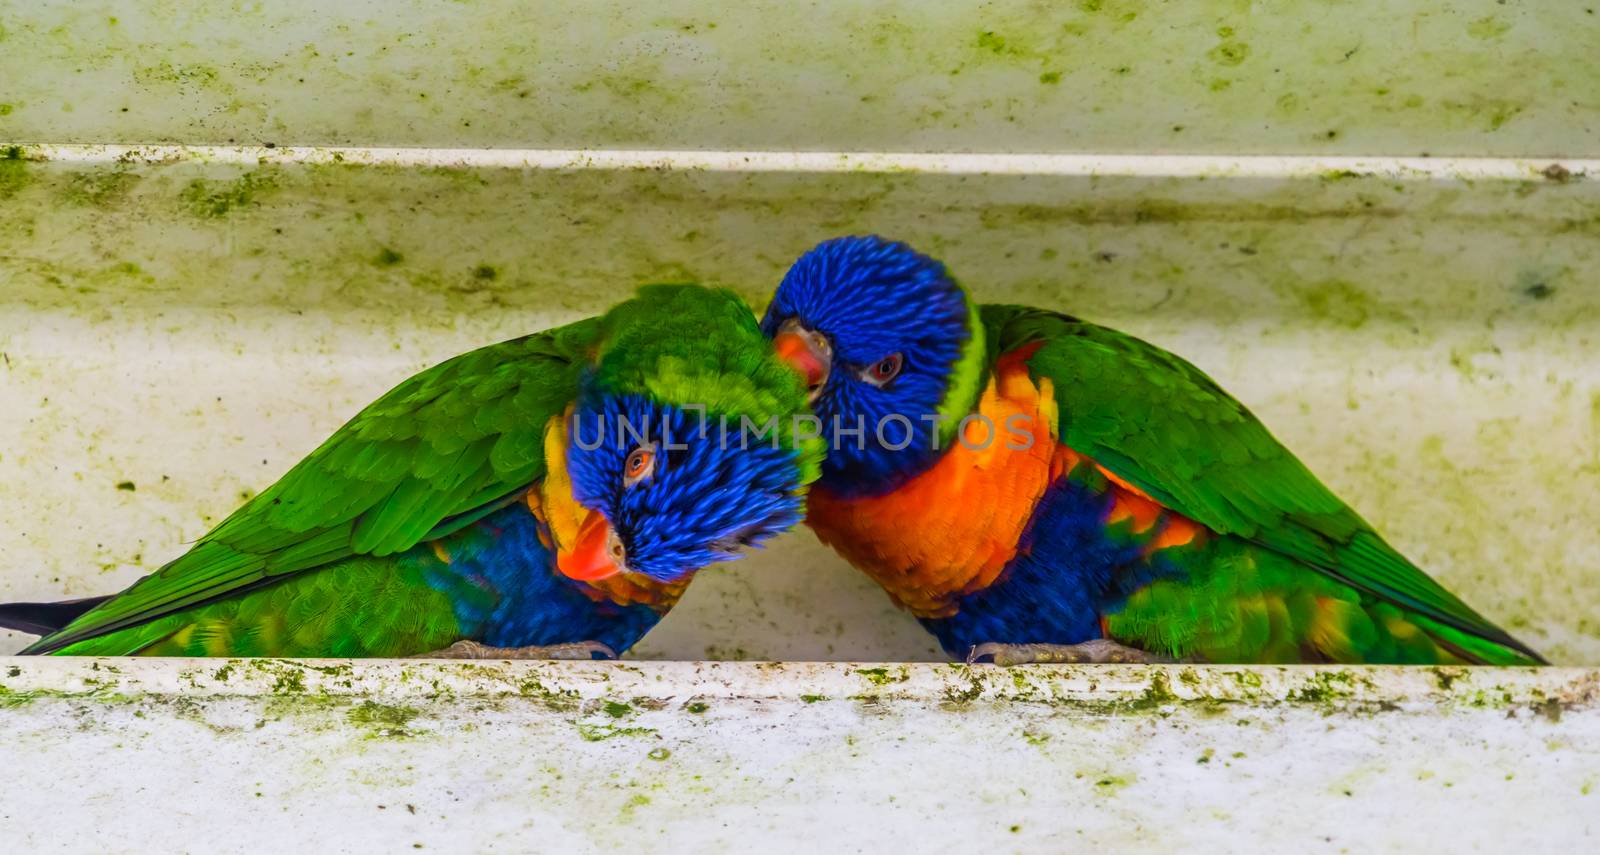 lovely rainbow parakeet couple preening each other, Typical bird behavior, Tropical animal specie from Australia